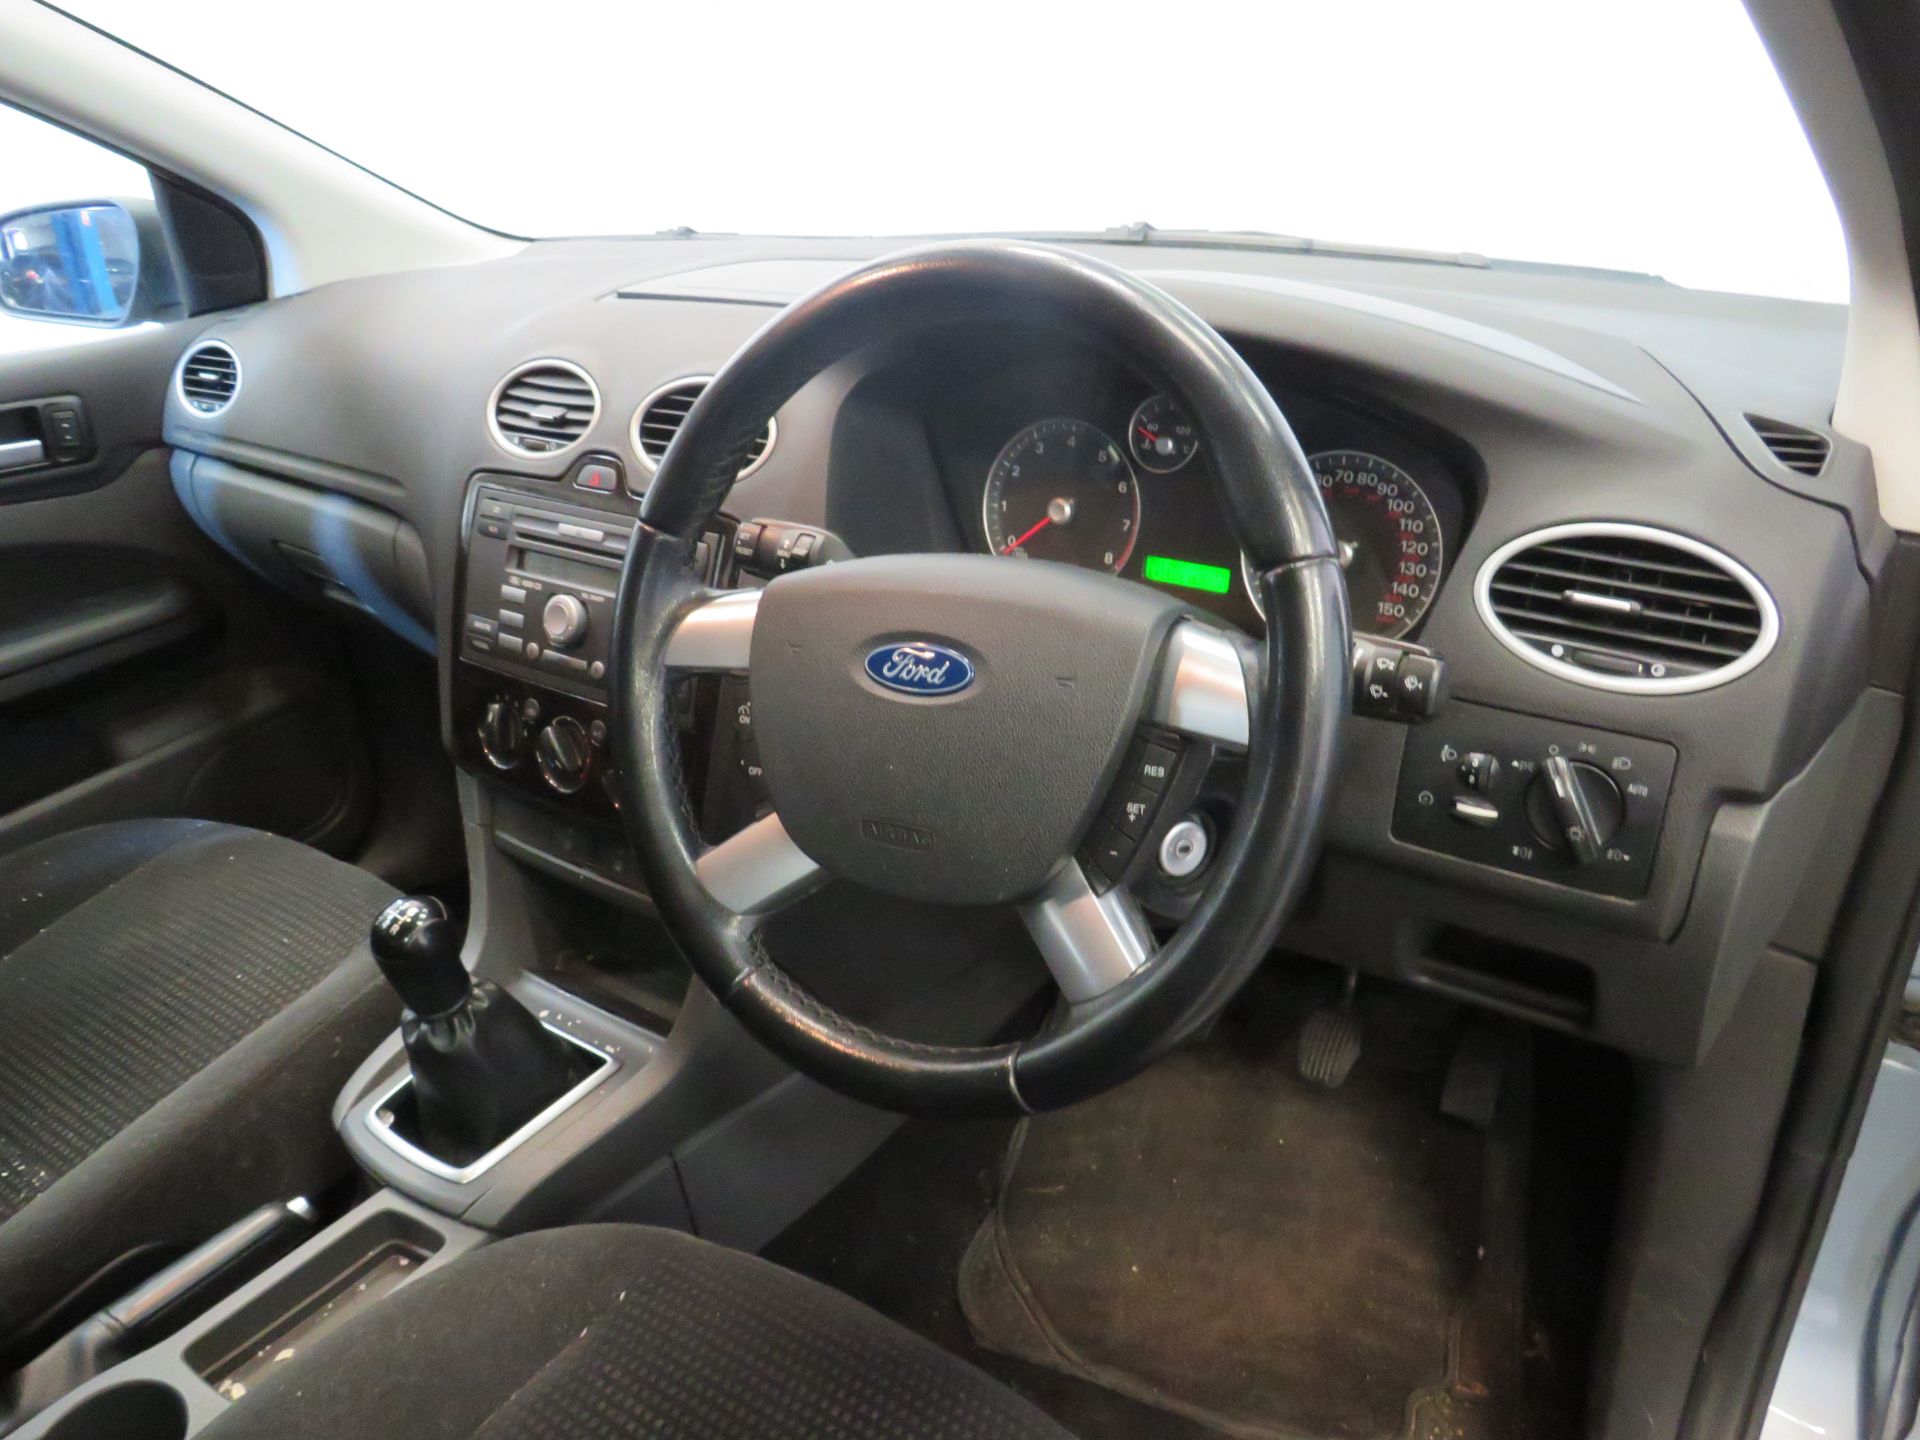 2005 Ford Focus Ghia 115 - 1596cc - Image 8 of 9